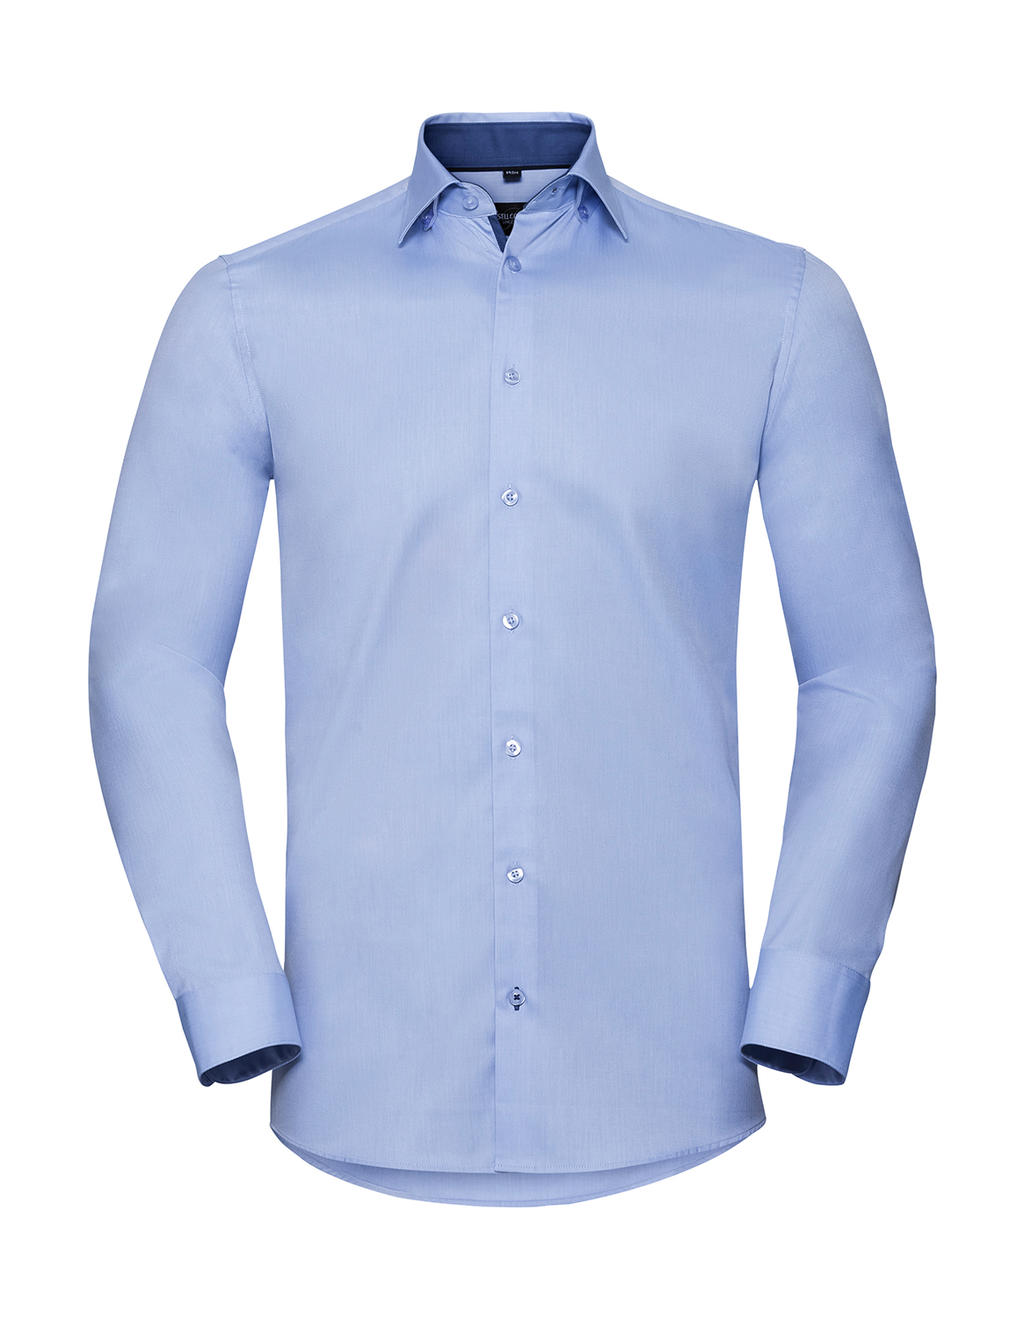 Košeľa Tailored Contrast Herringbone - light blue/mid blue/bright navy